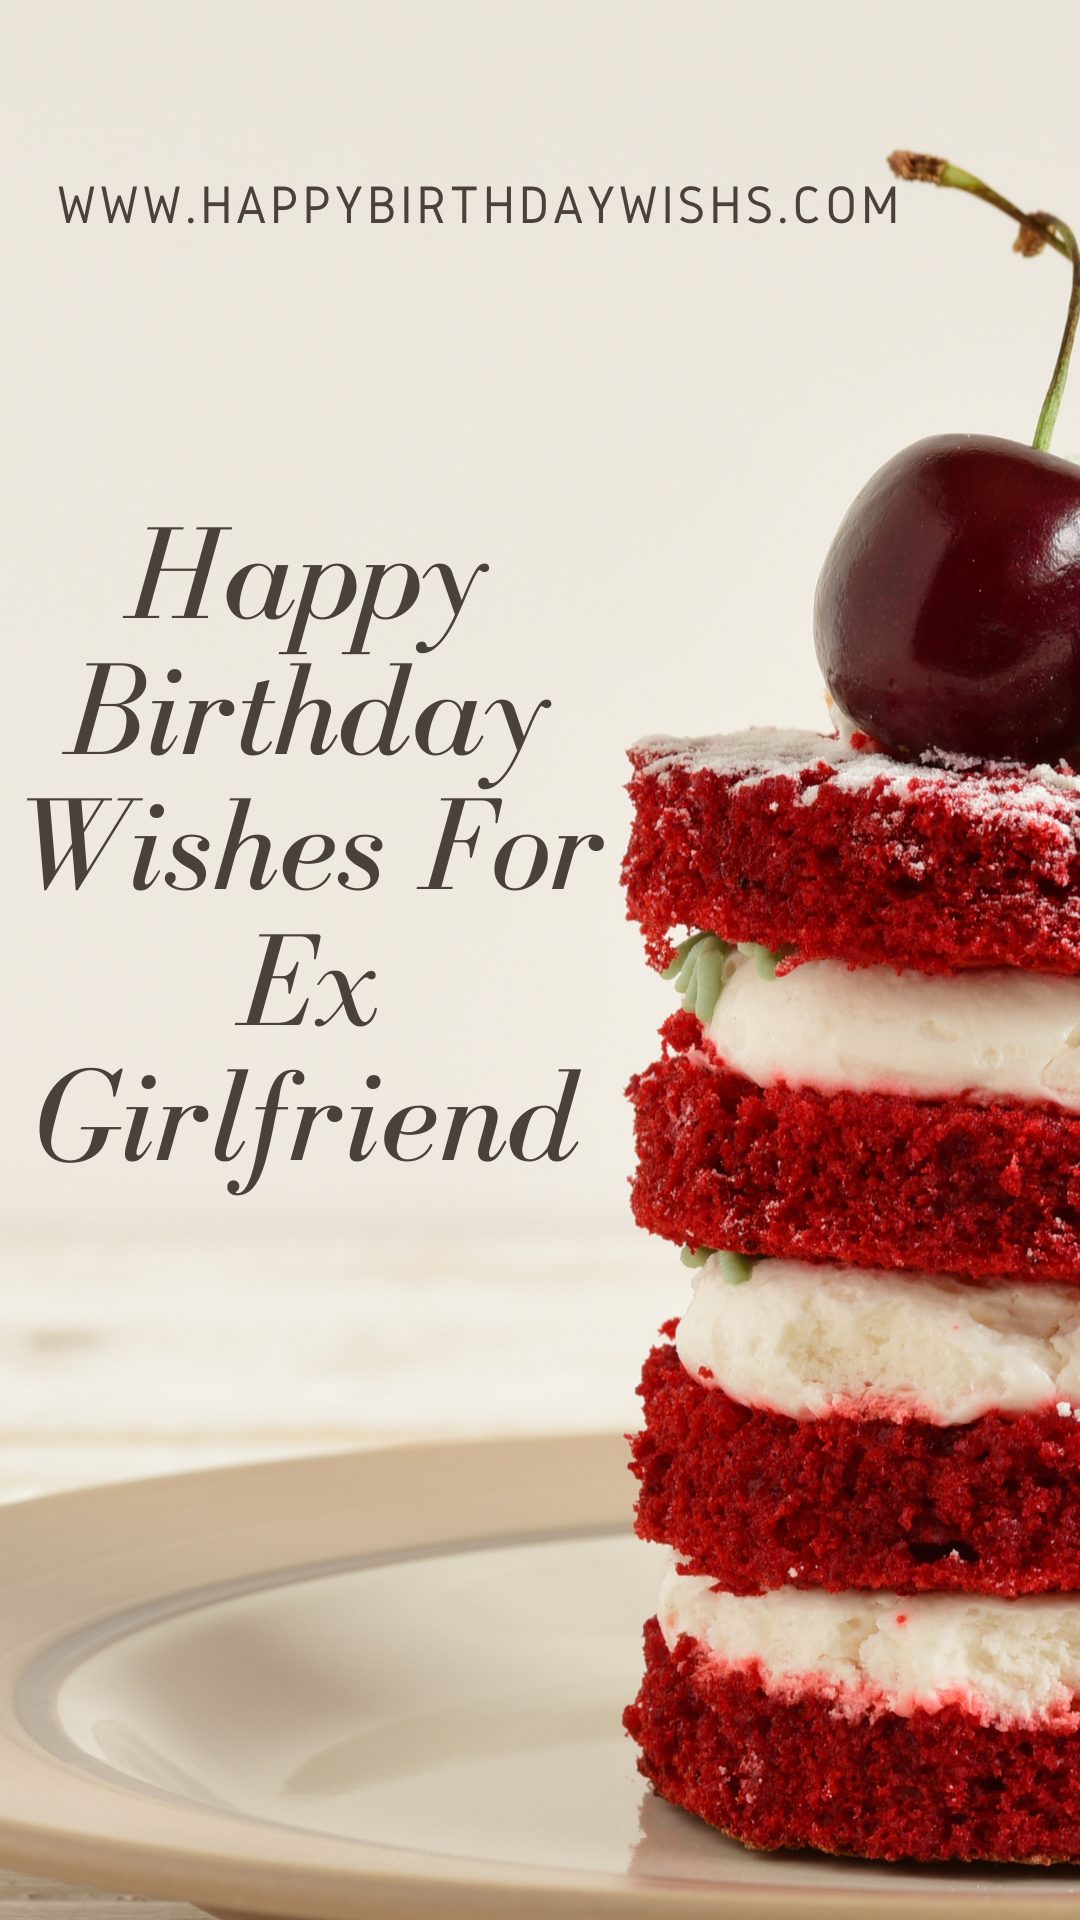 Happy Birthday Wishes For Ex Girlfriend